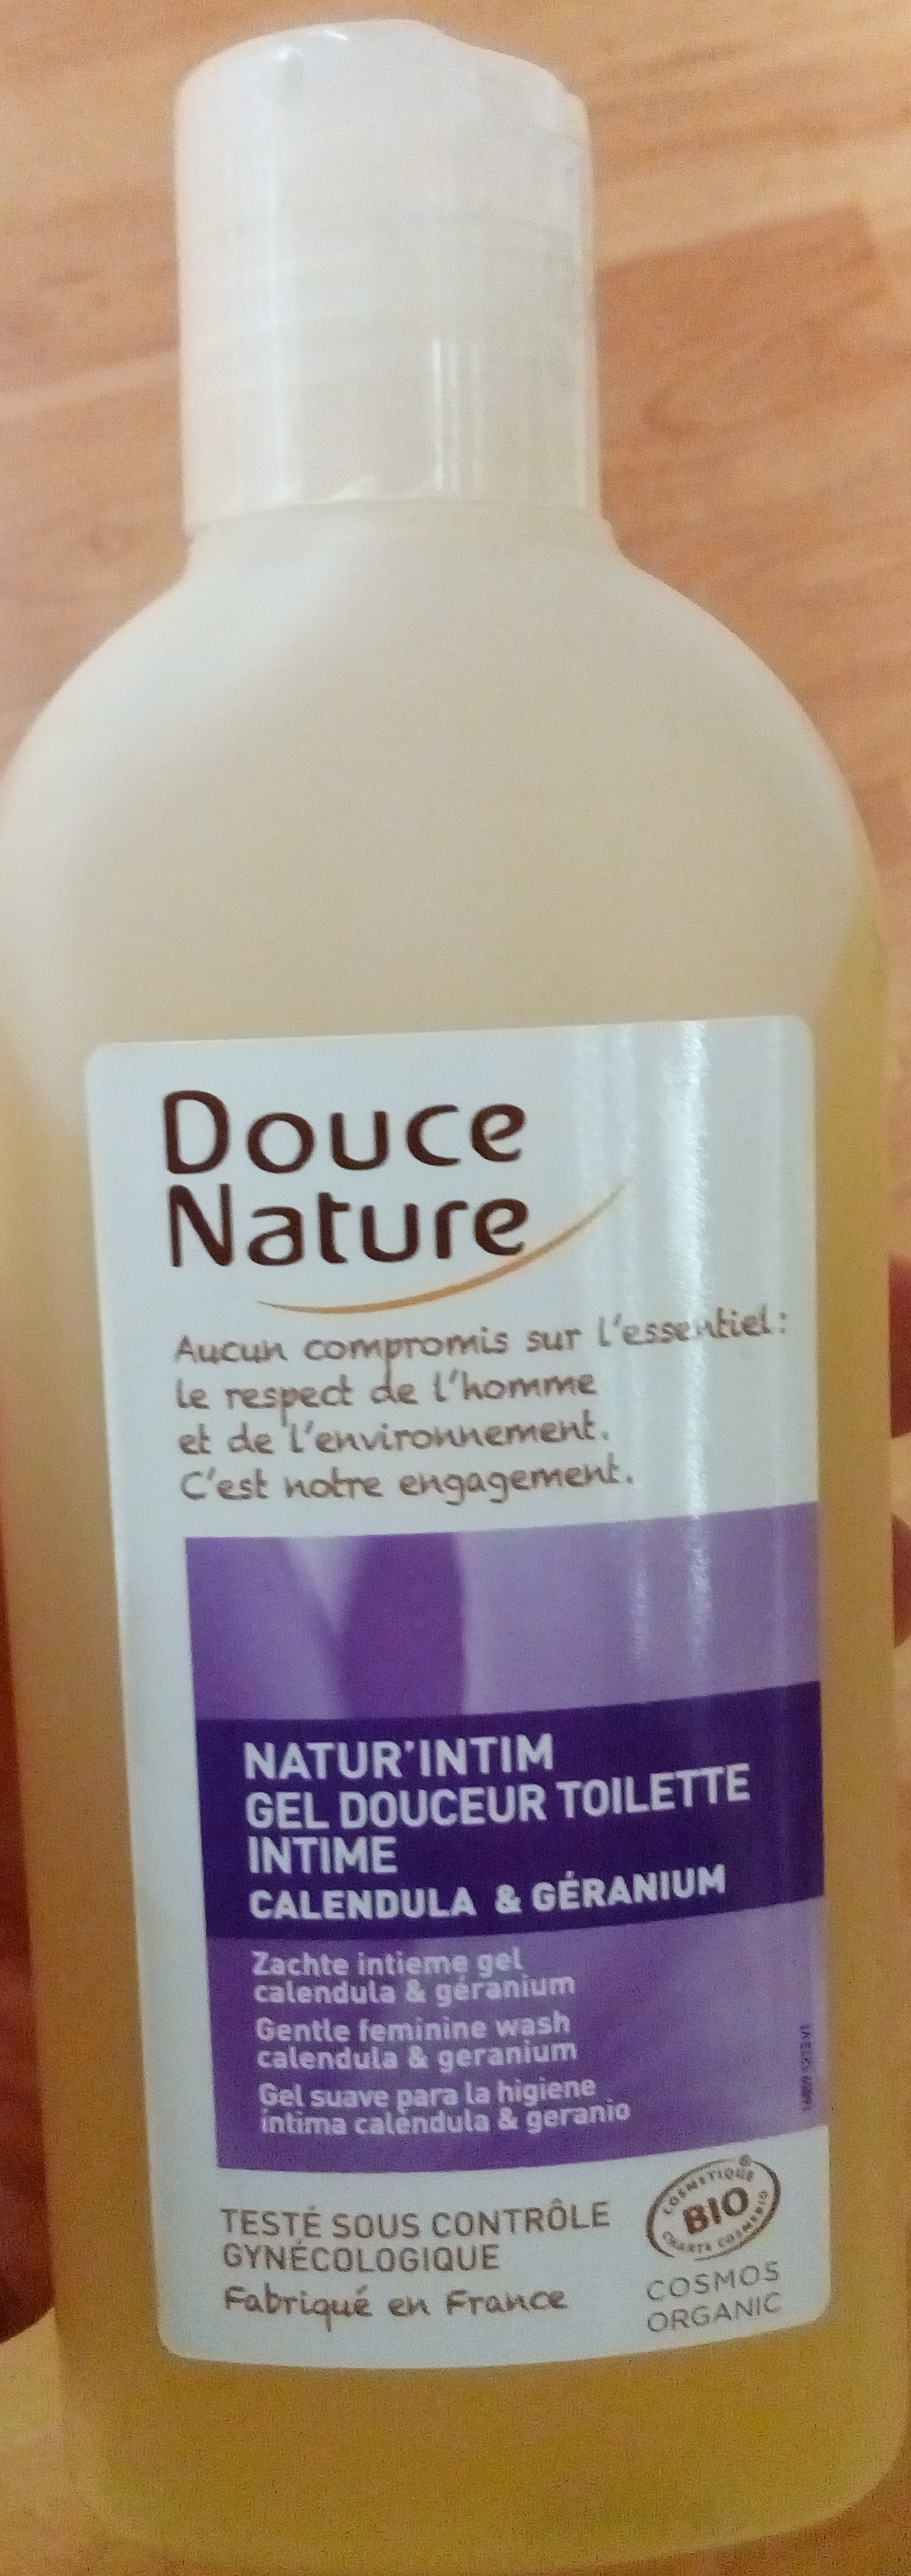 Natur'Intim Gel douceur Toilette Intime - Produkt - fr